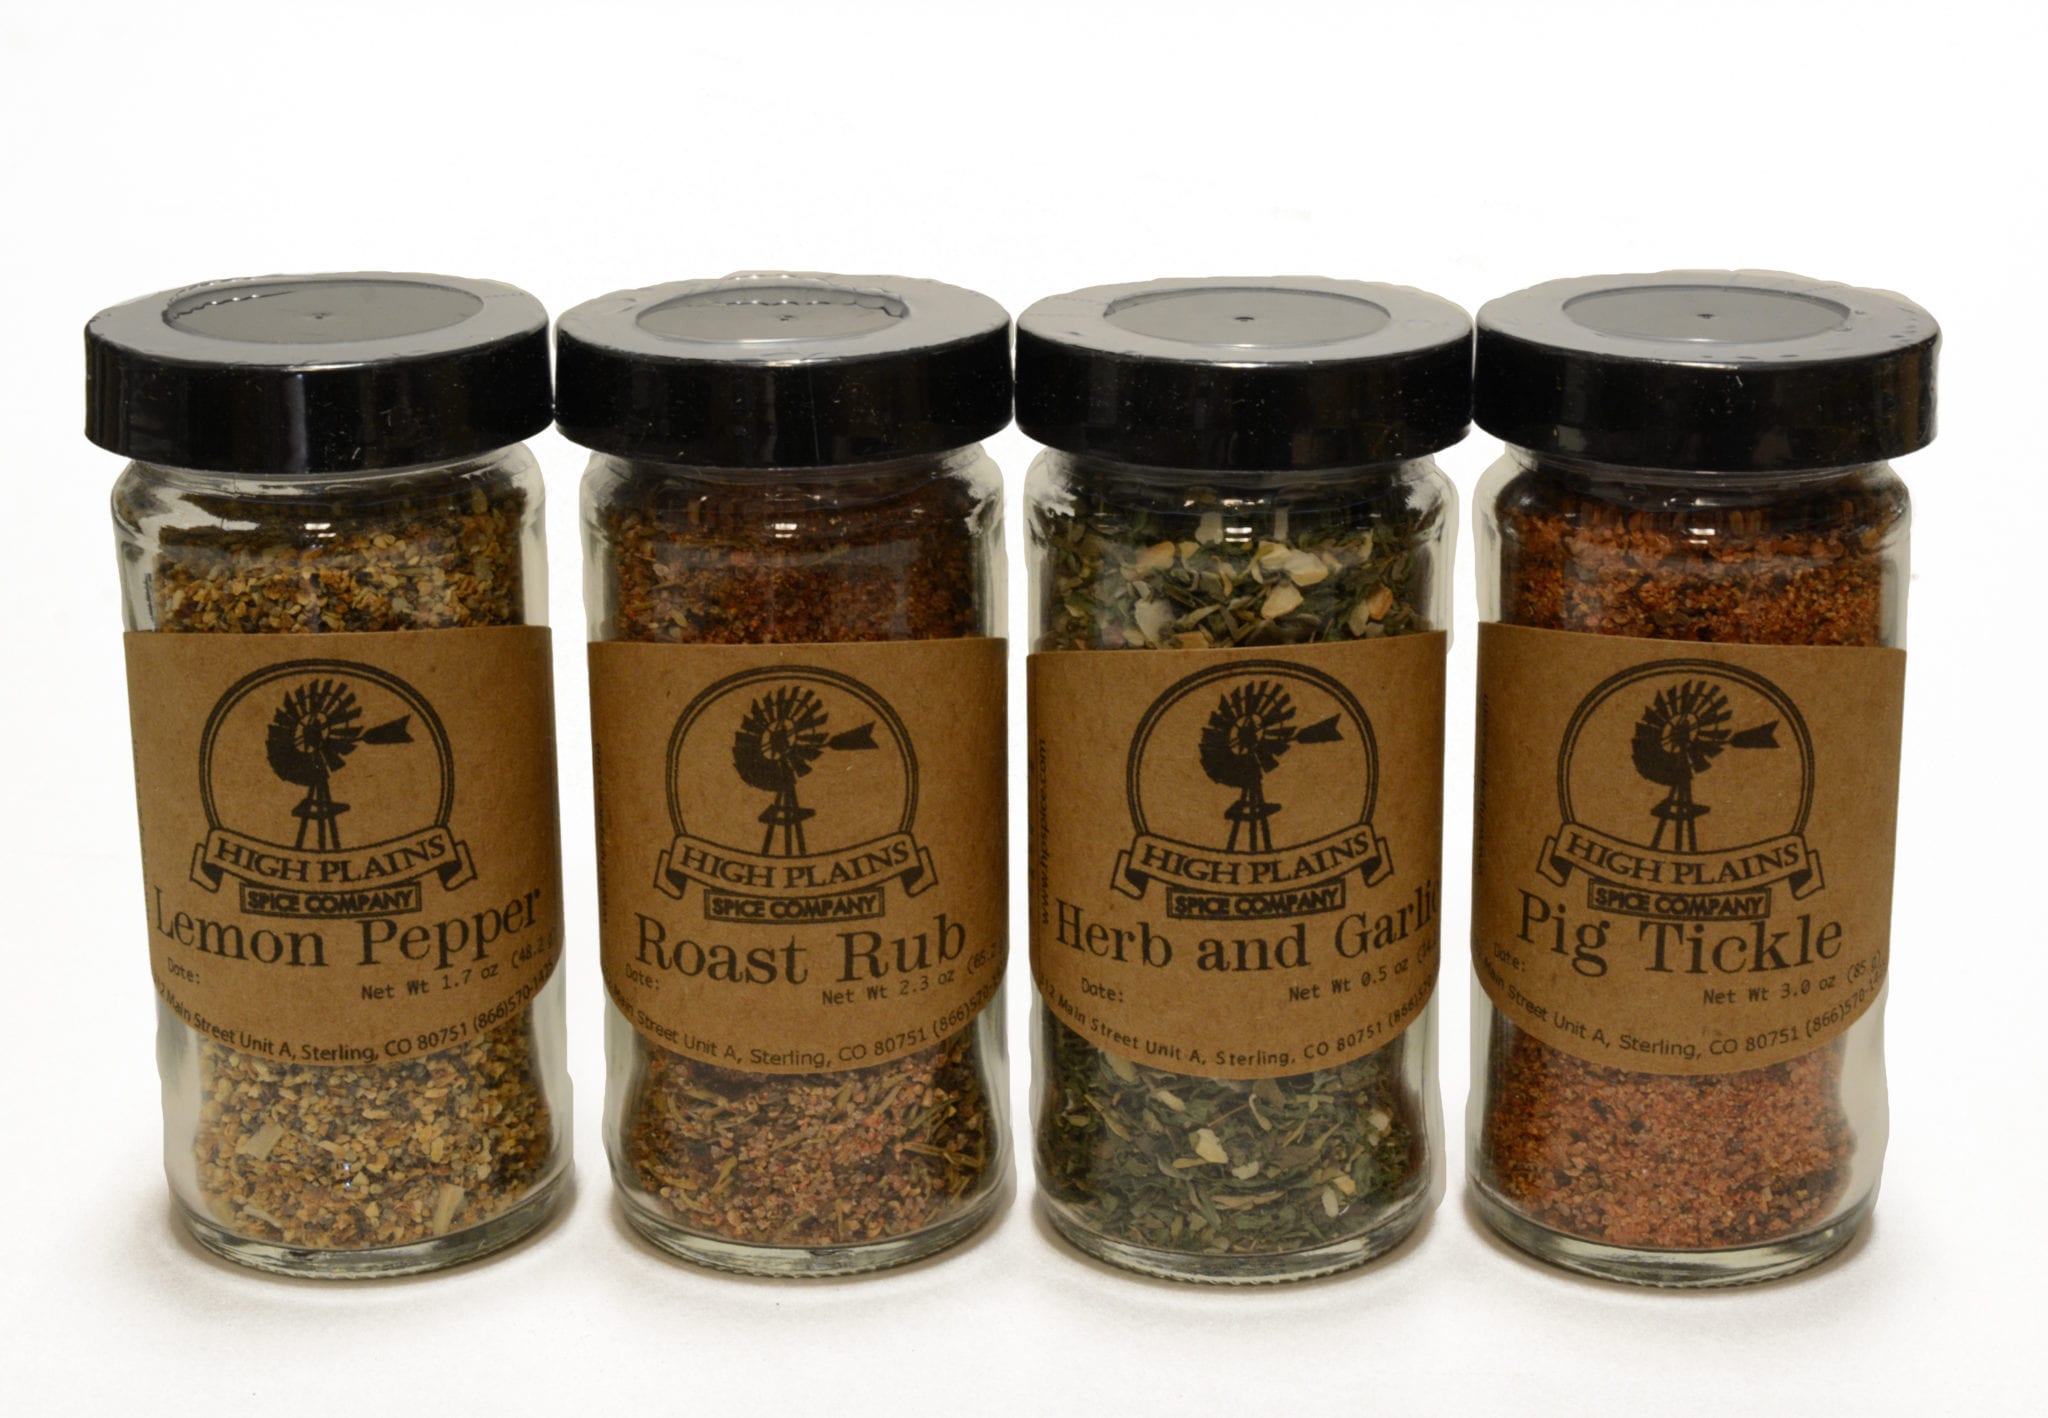 Wedding Spices - High Plains Spice Company